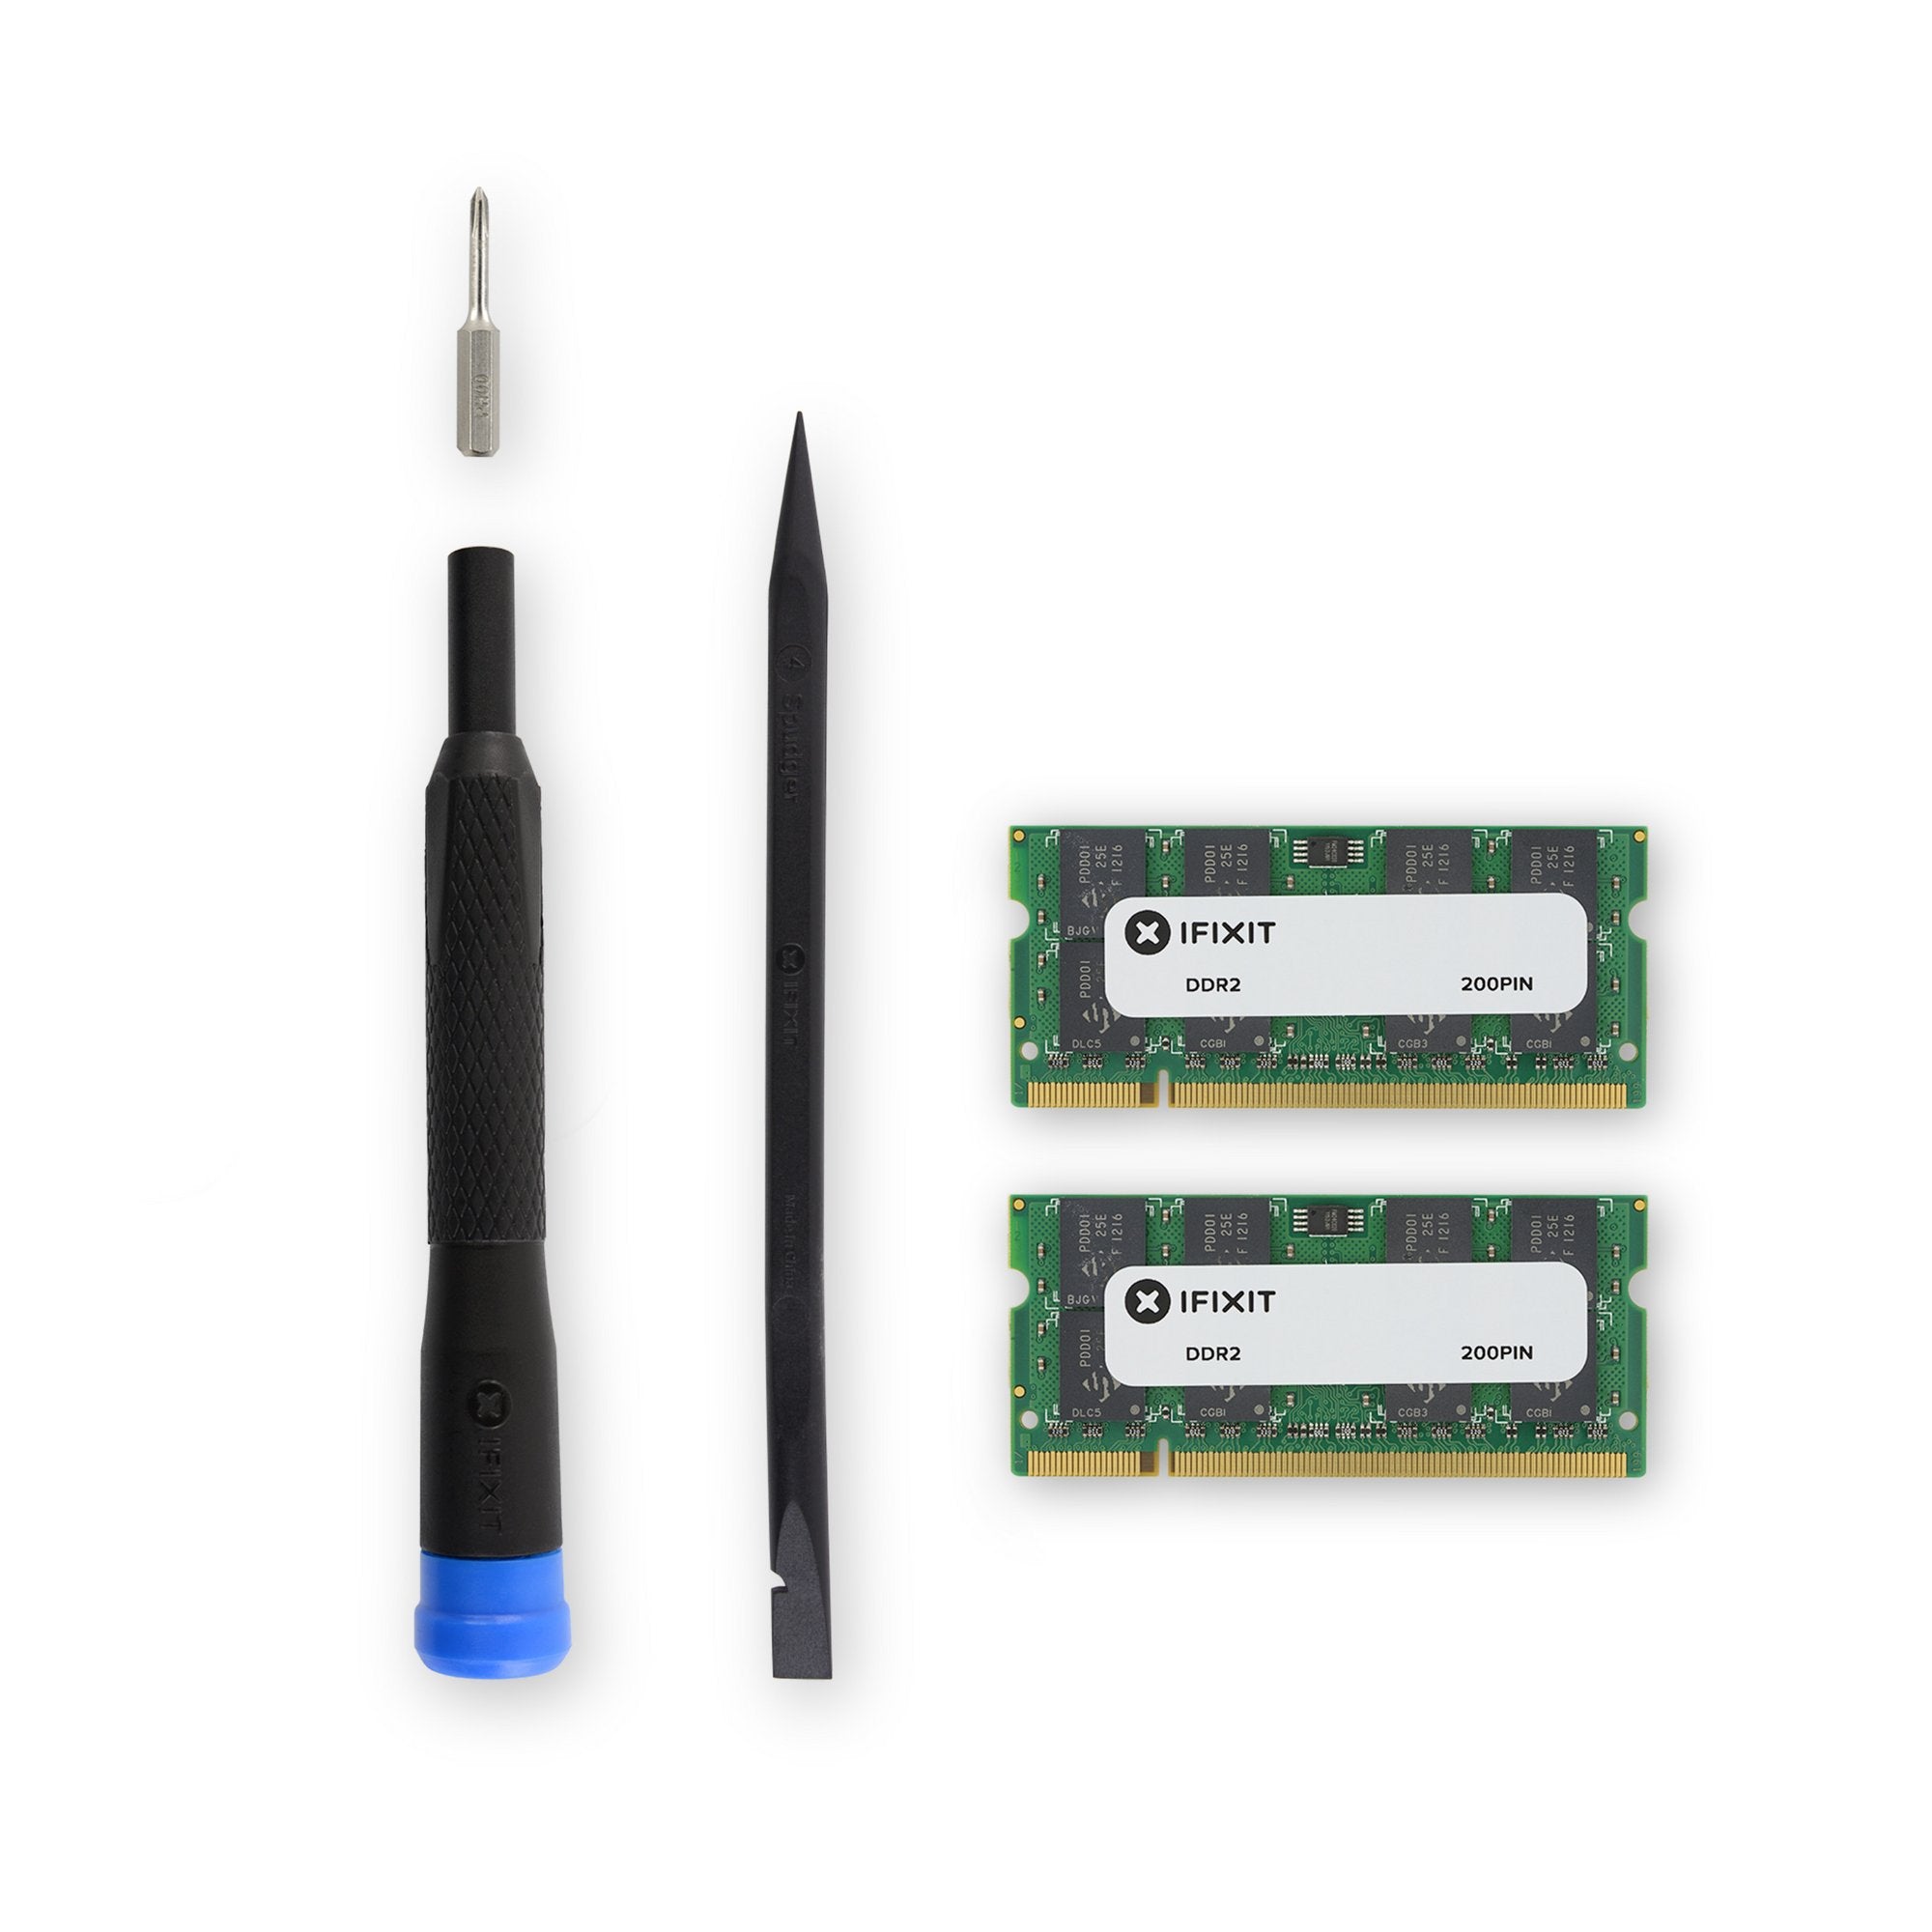 MacBook 13" Core 2 Duo Mid 2007 Memory Maxxer RAM Upgrade Kit